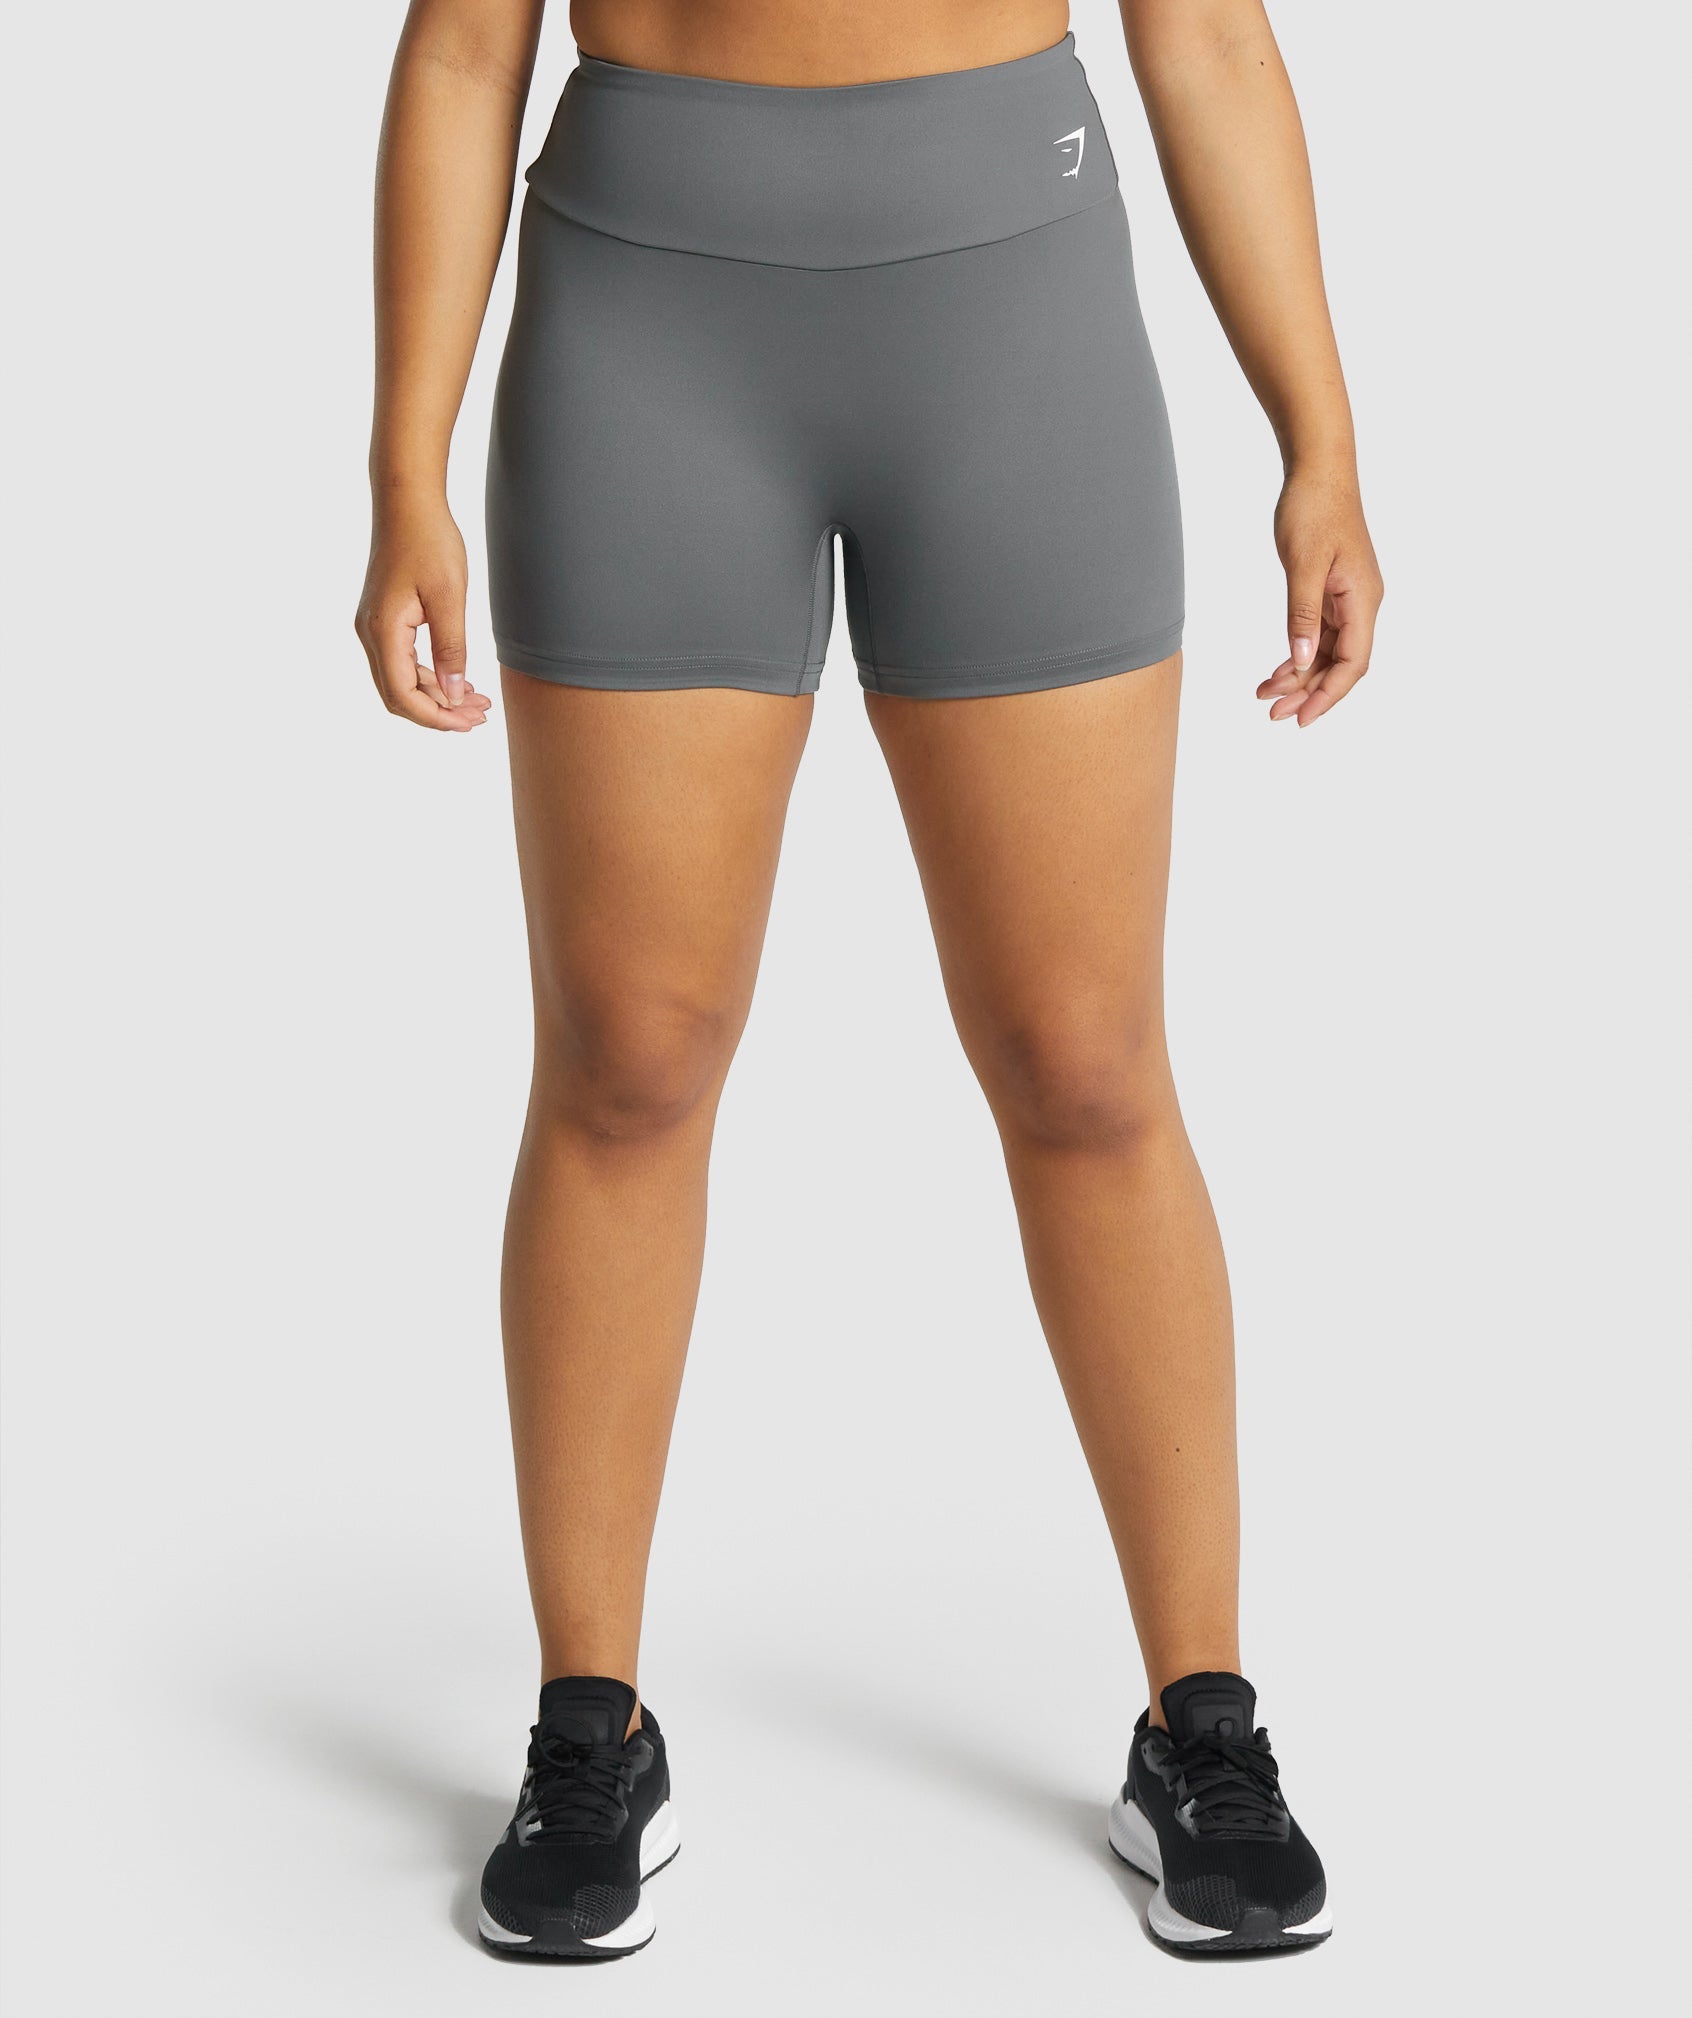 Gymshark Training Short Length Shorts  Clothes design, Training shorts,  Gym shorts womens